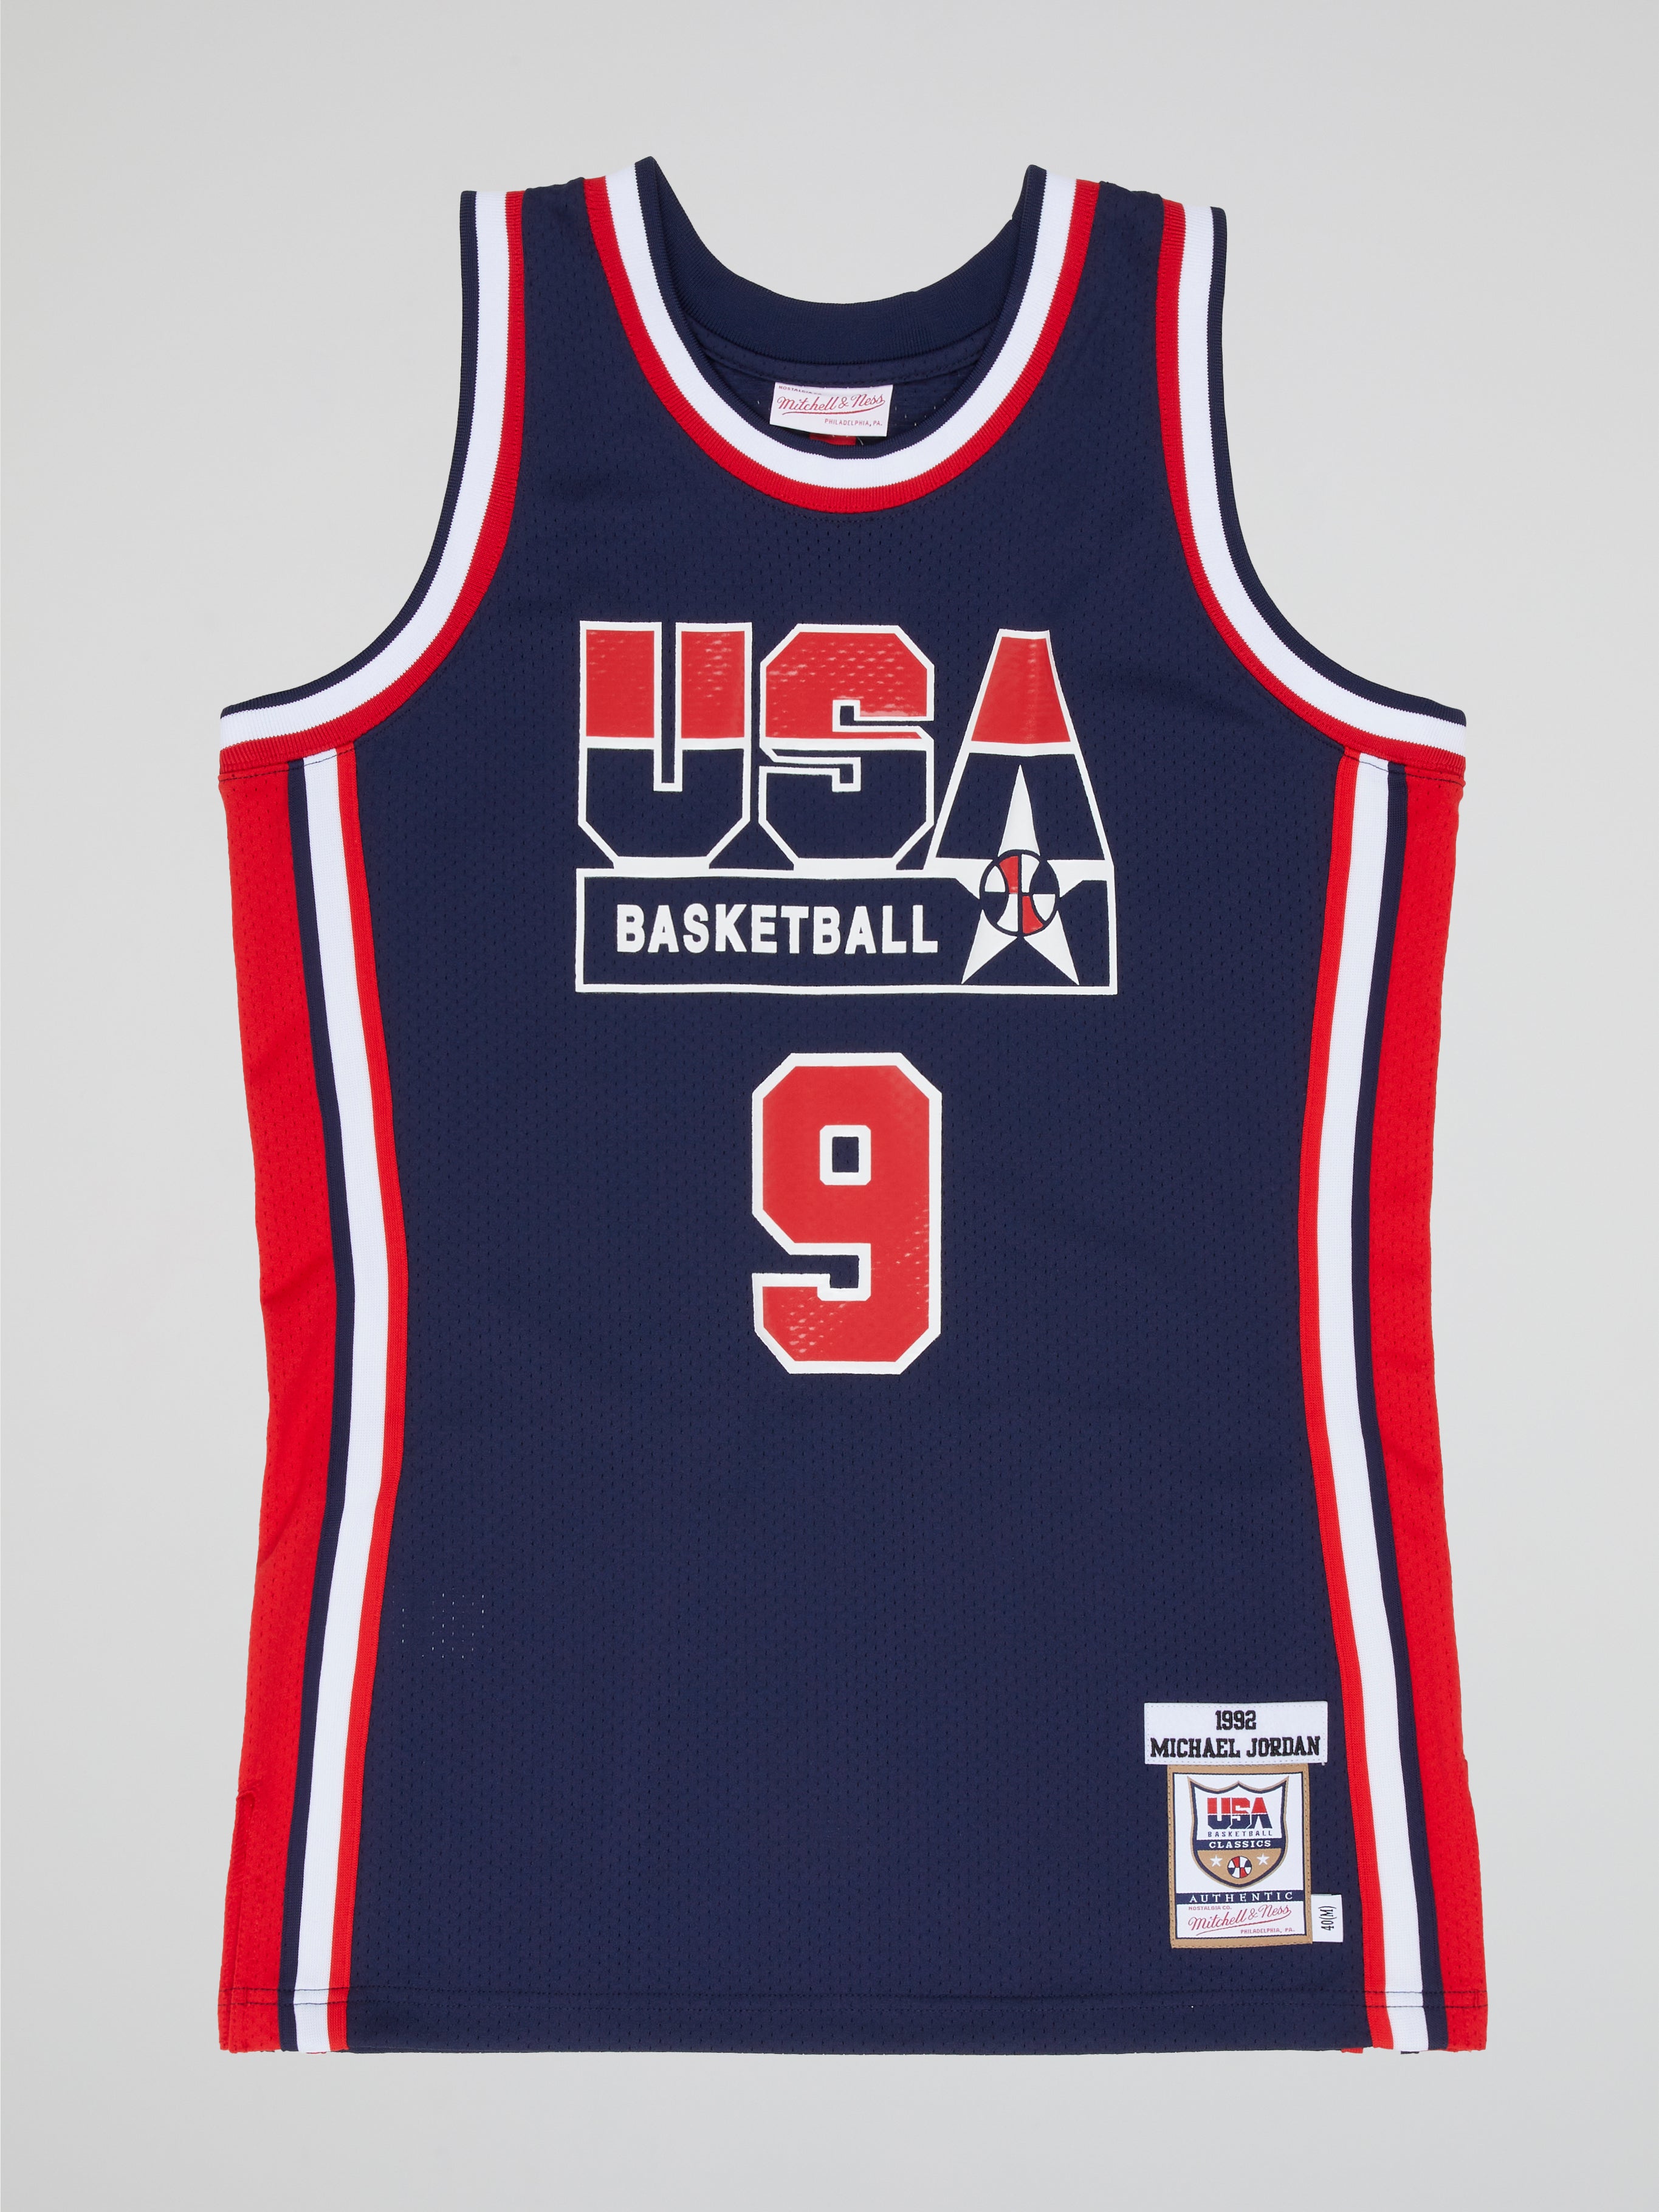 Authentic Jersey Team USA 1992 Michael Jordan - Shop Mitchell